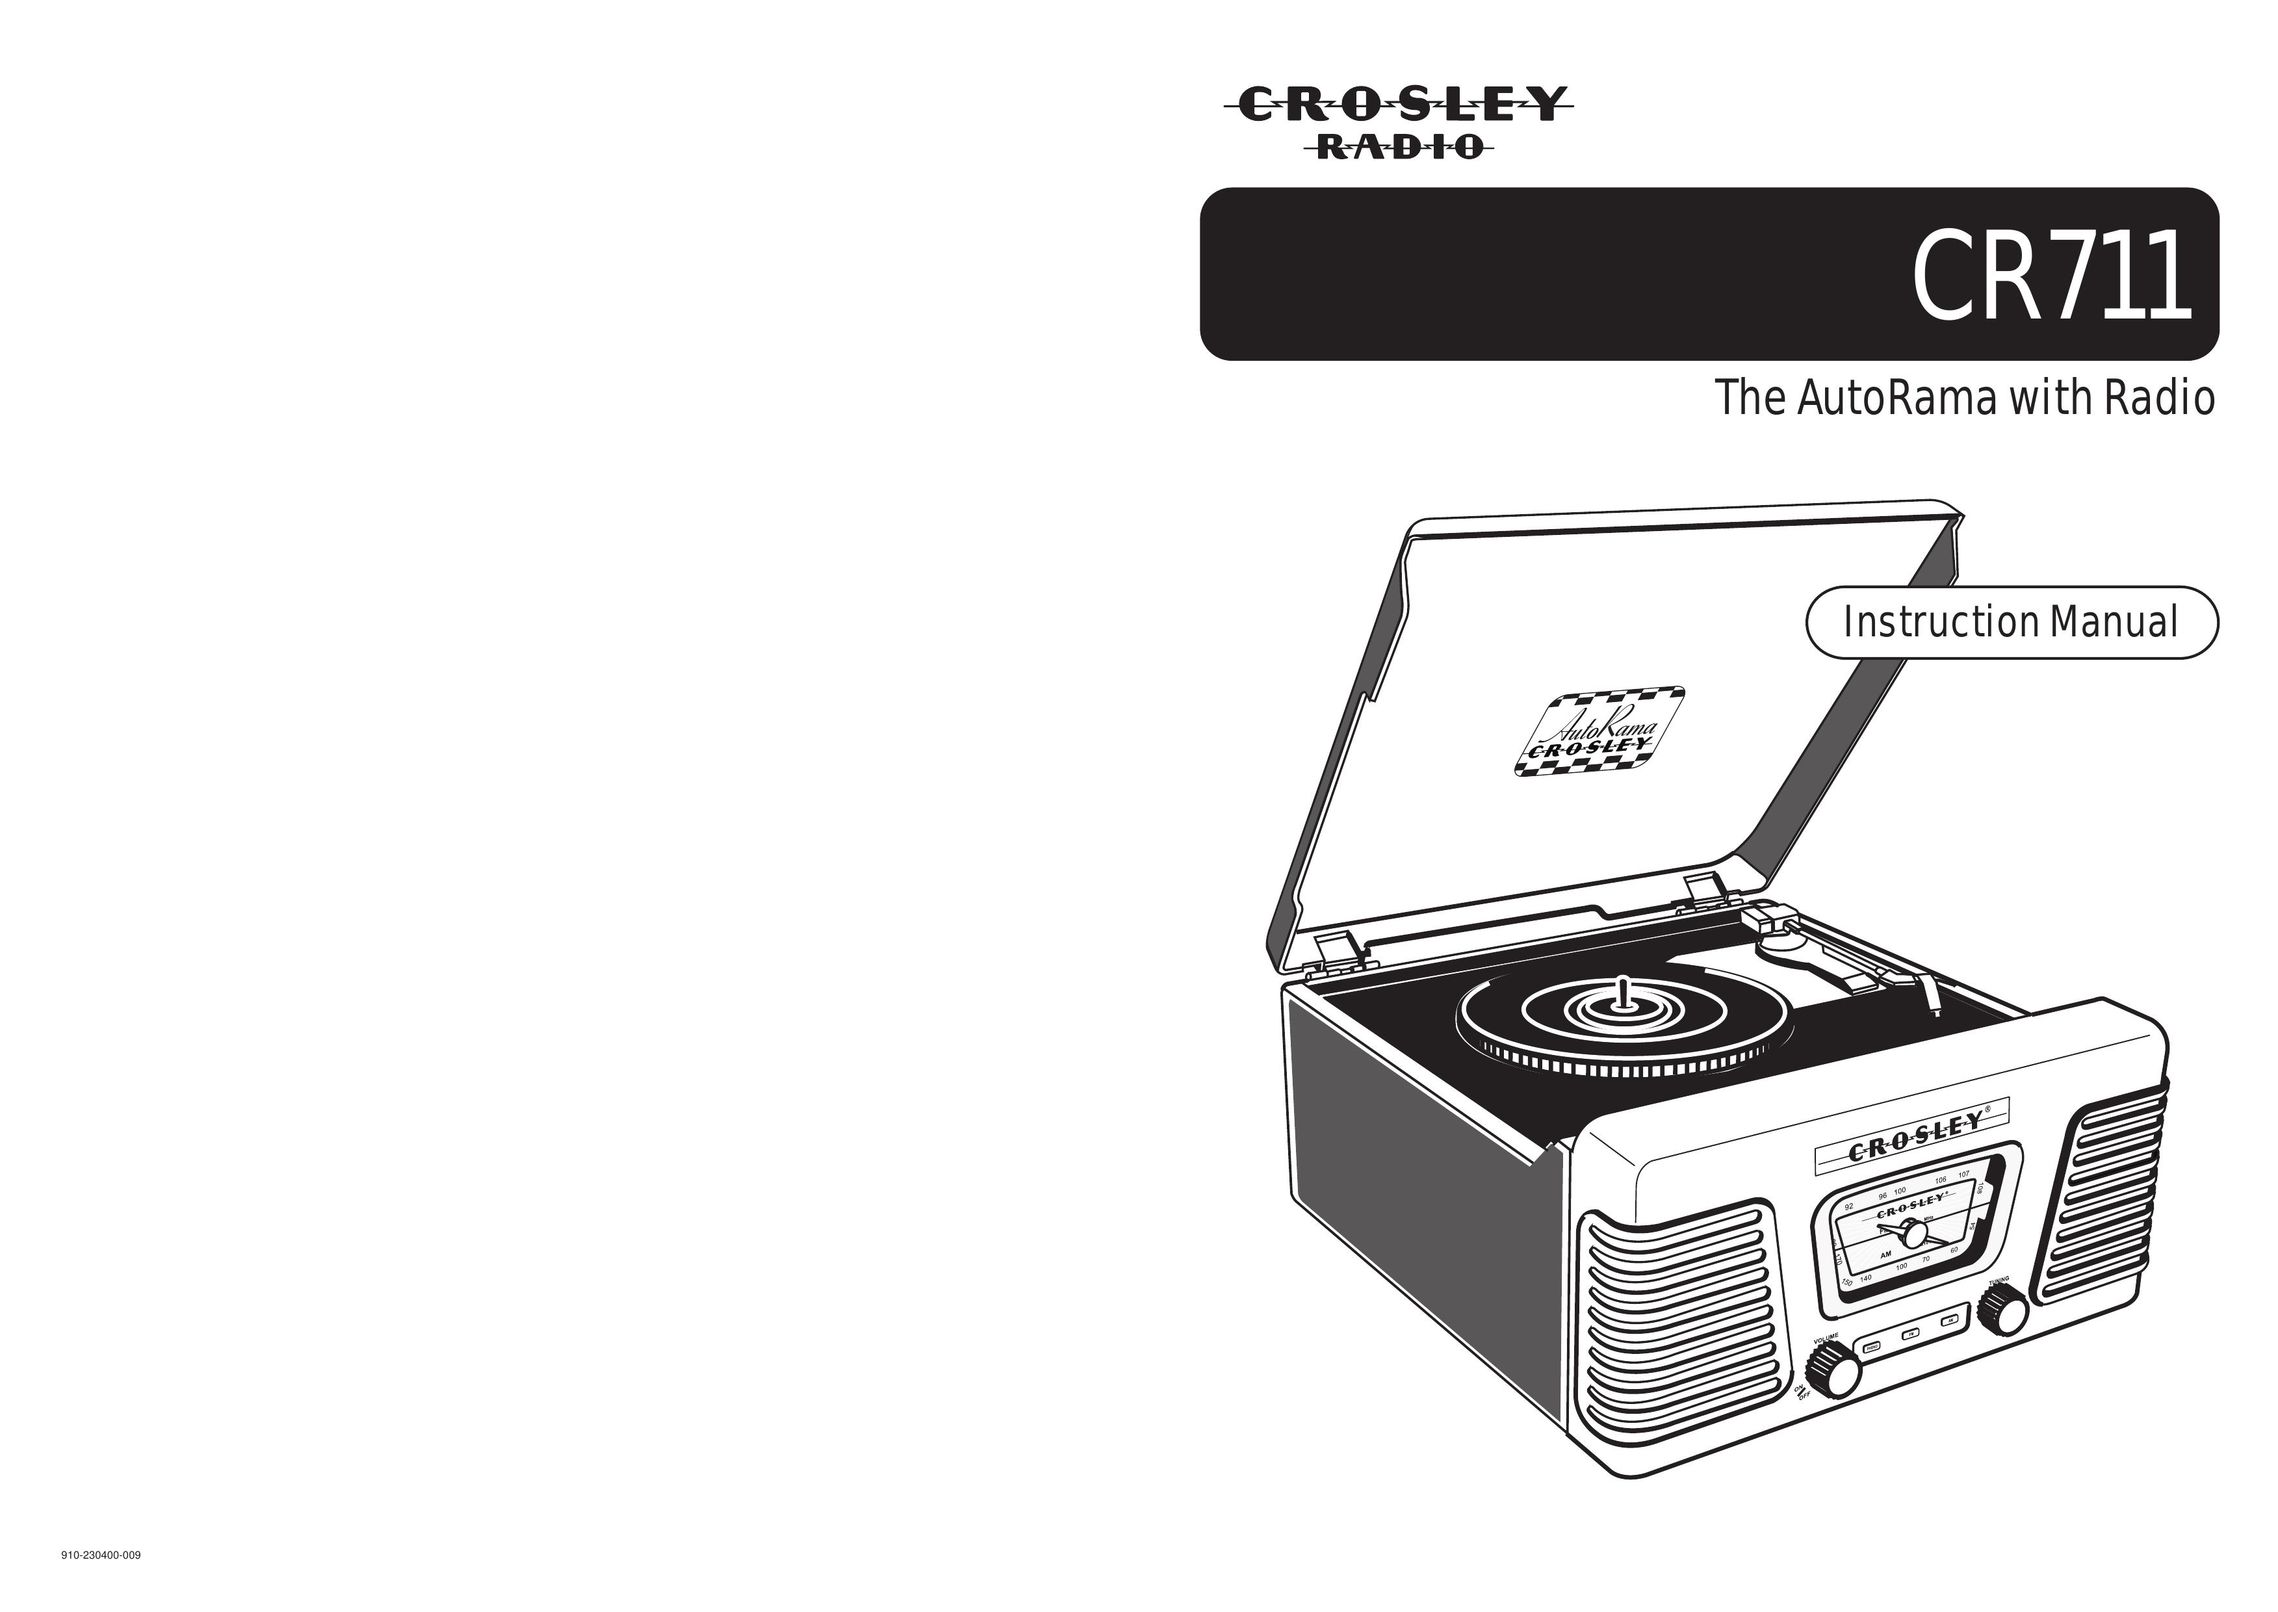 Crosley Radio CR711 Turntable User Manual